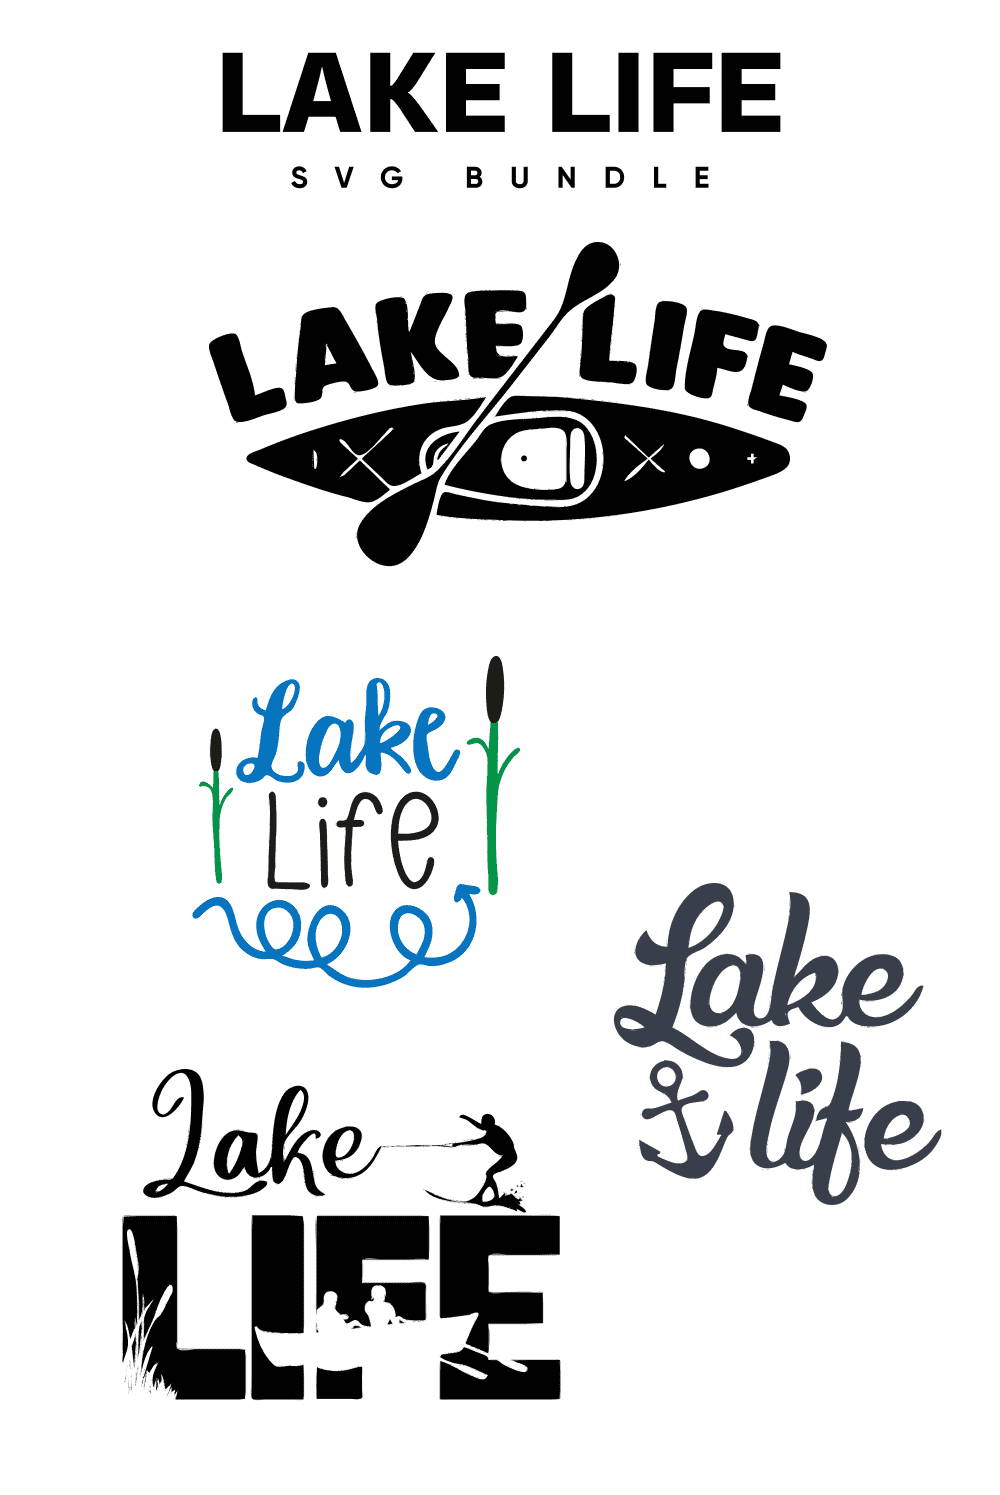 Lake Life Svg Free - Pinterest.